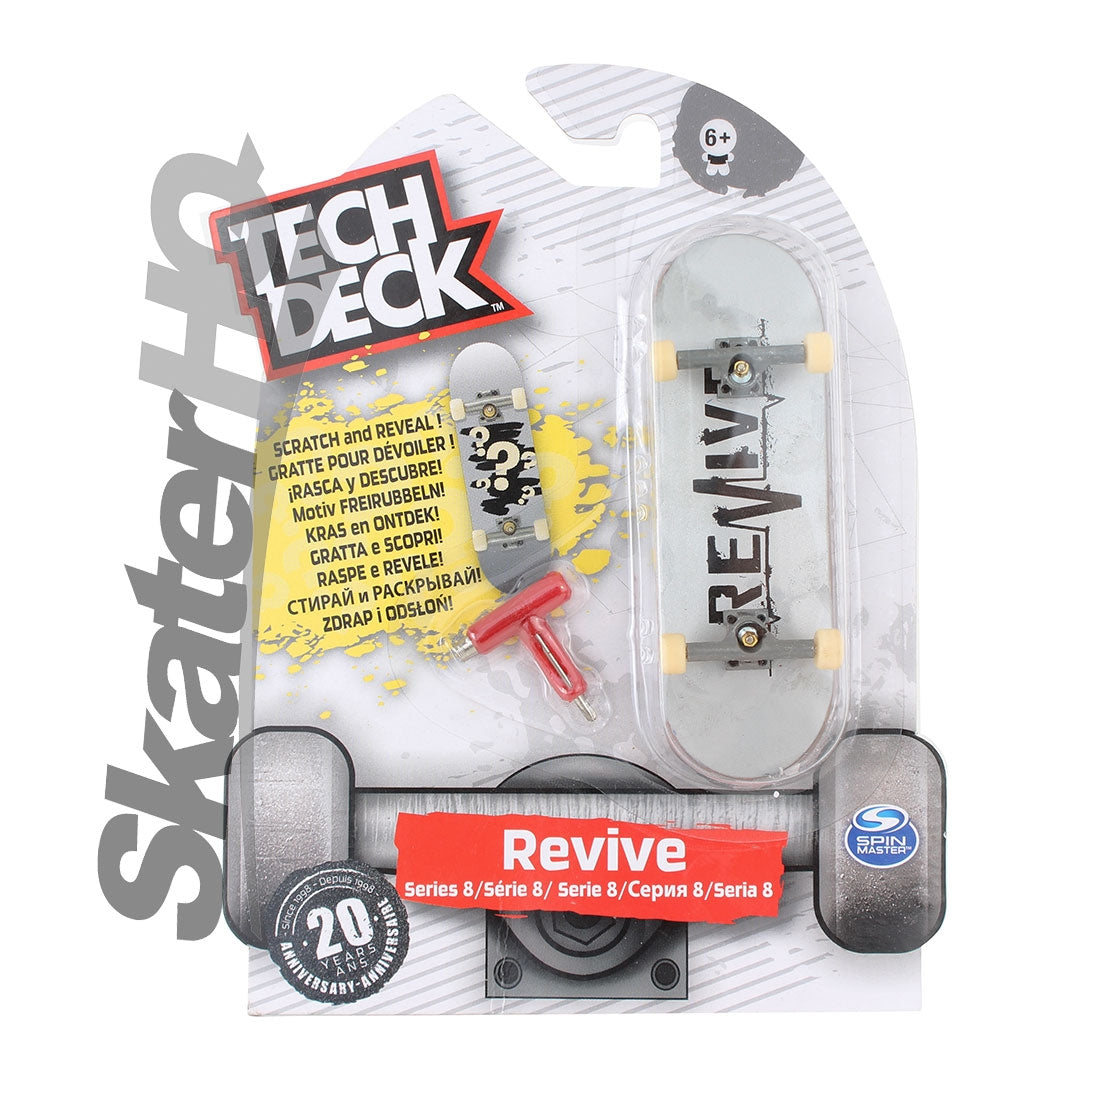 Tech Deck Series 8 - Revive - Scratch Reveal Skateboard Accessories